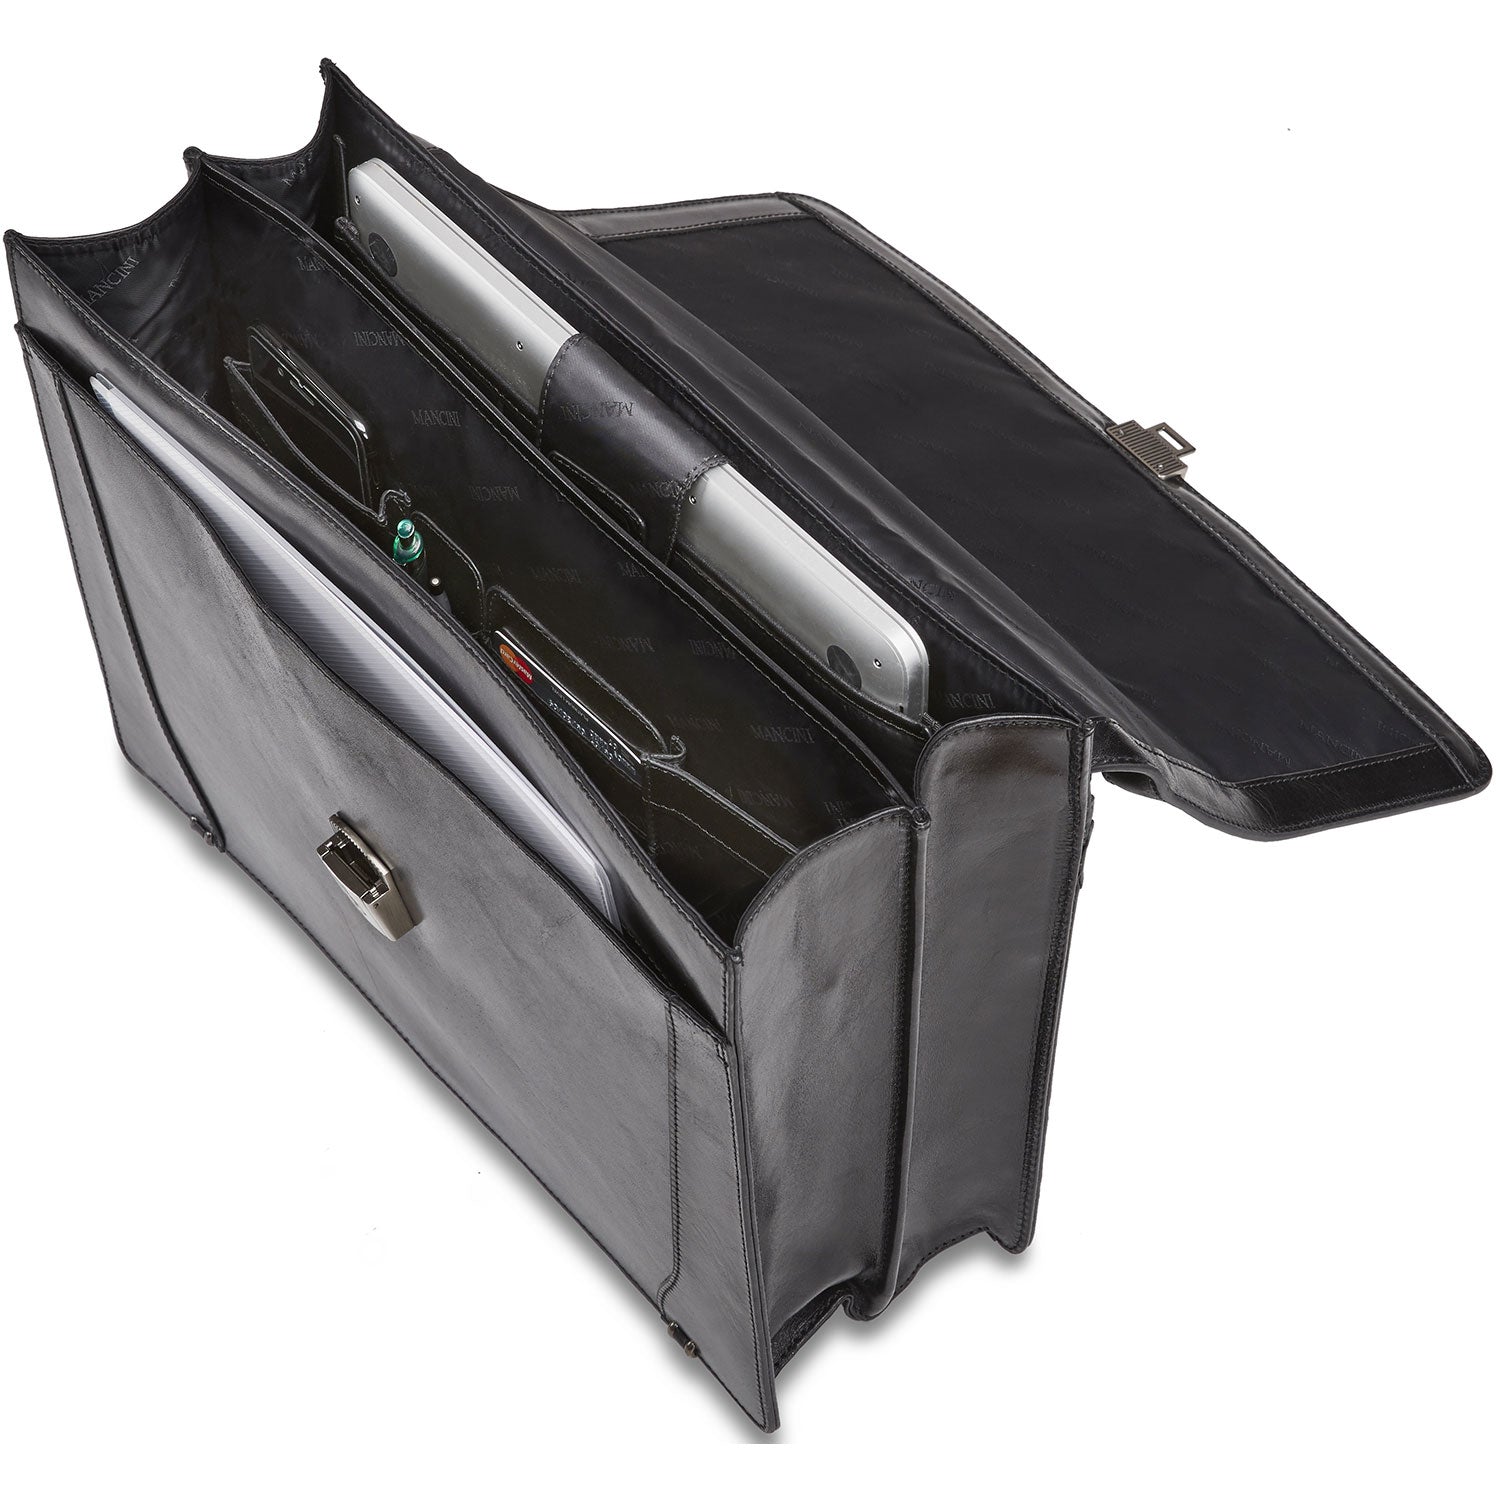 Mancini Signature Collection Laptop / Tablet Compatible Double Compartment Briefcase - Black